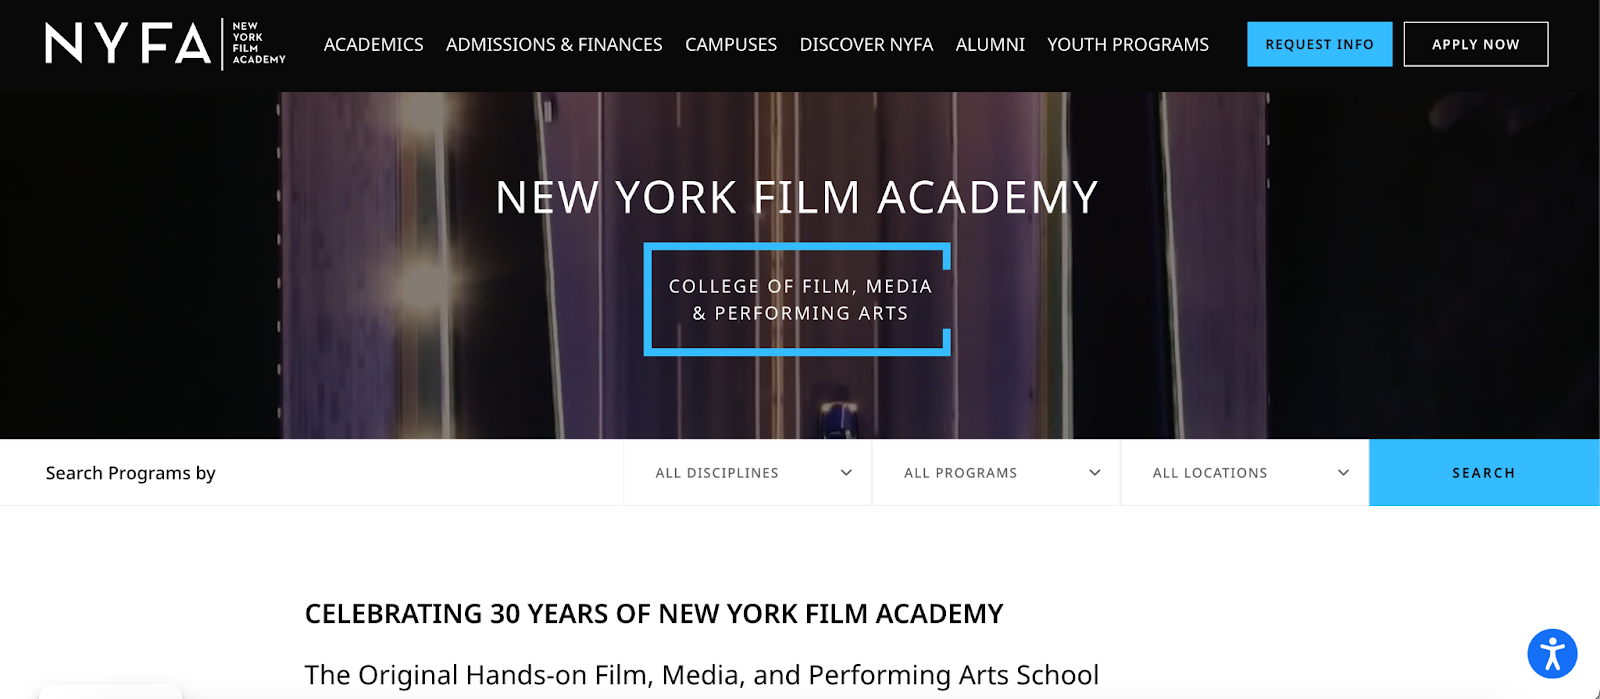 NYFA education based website